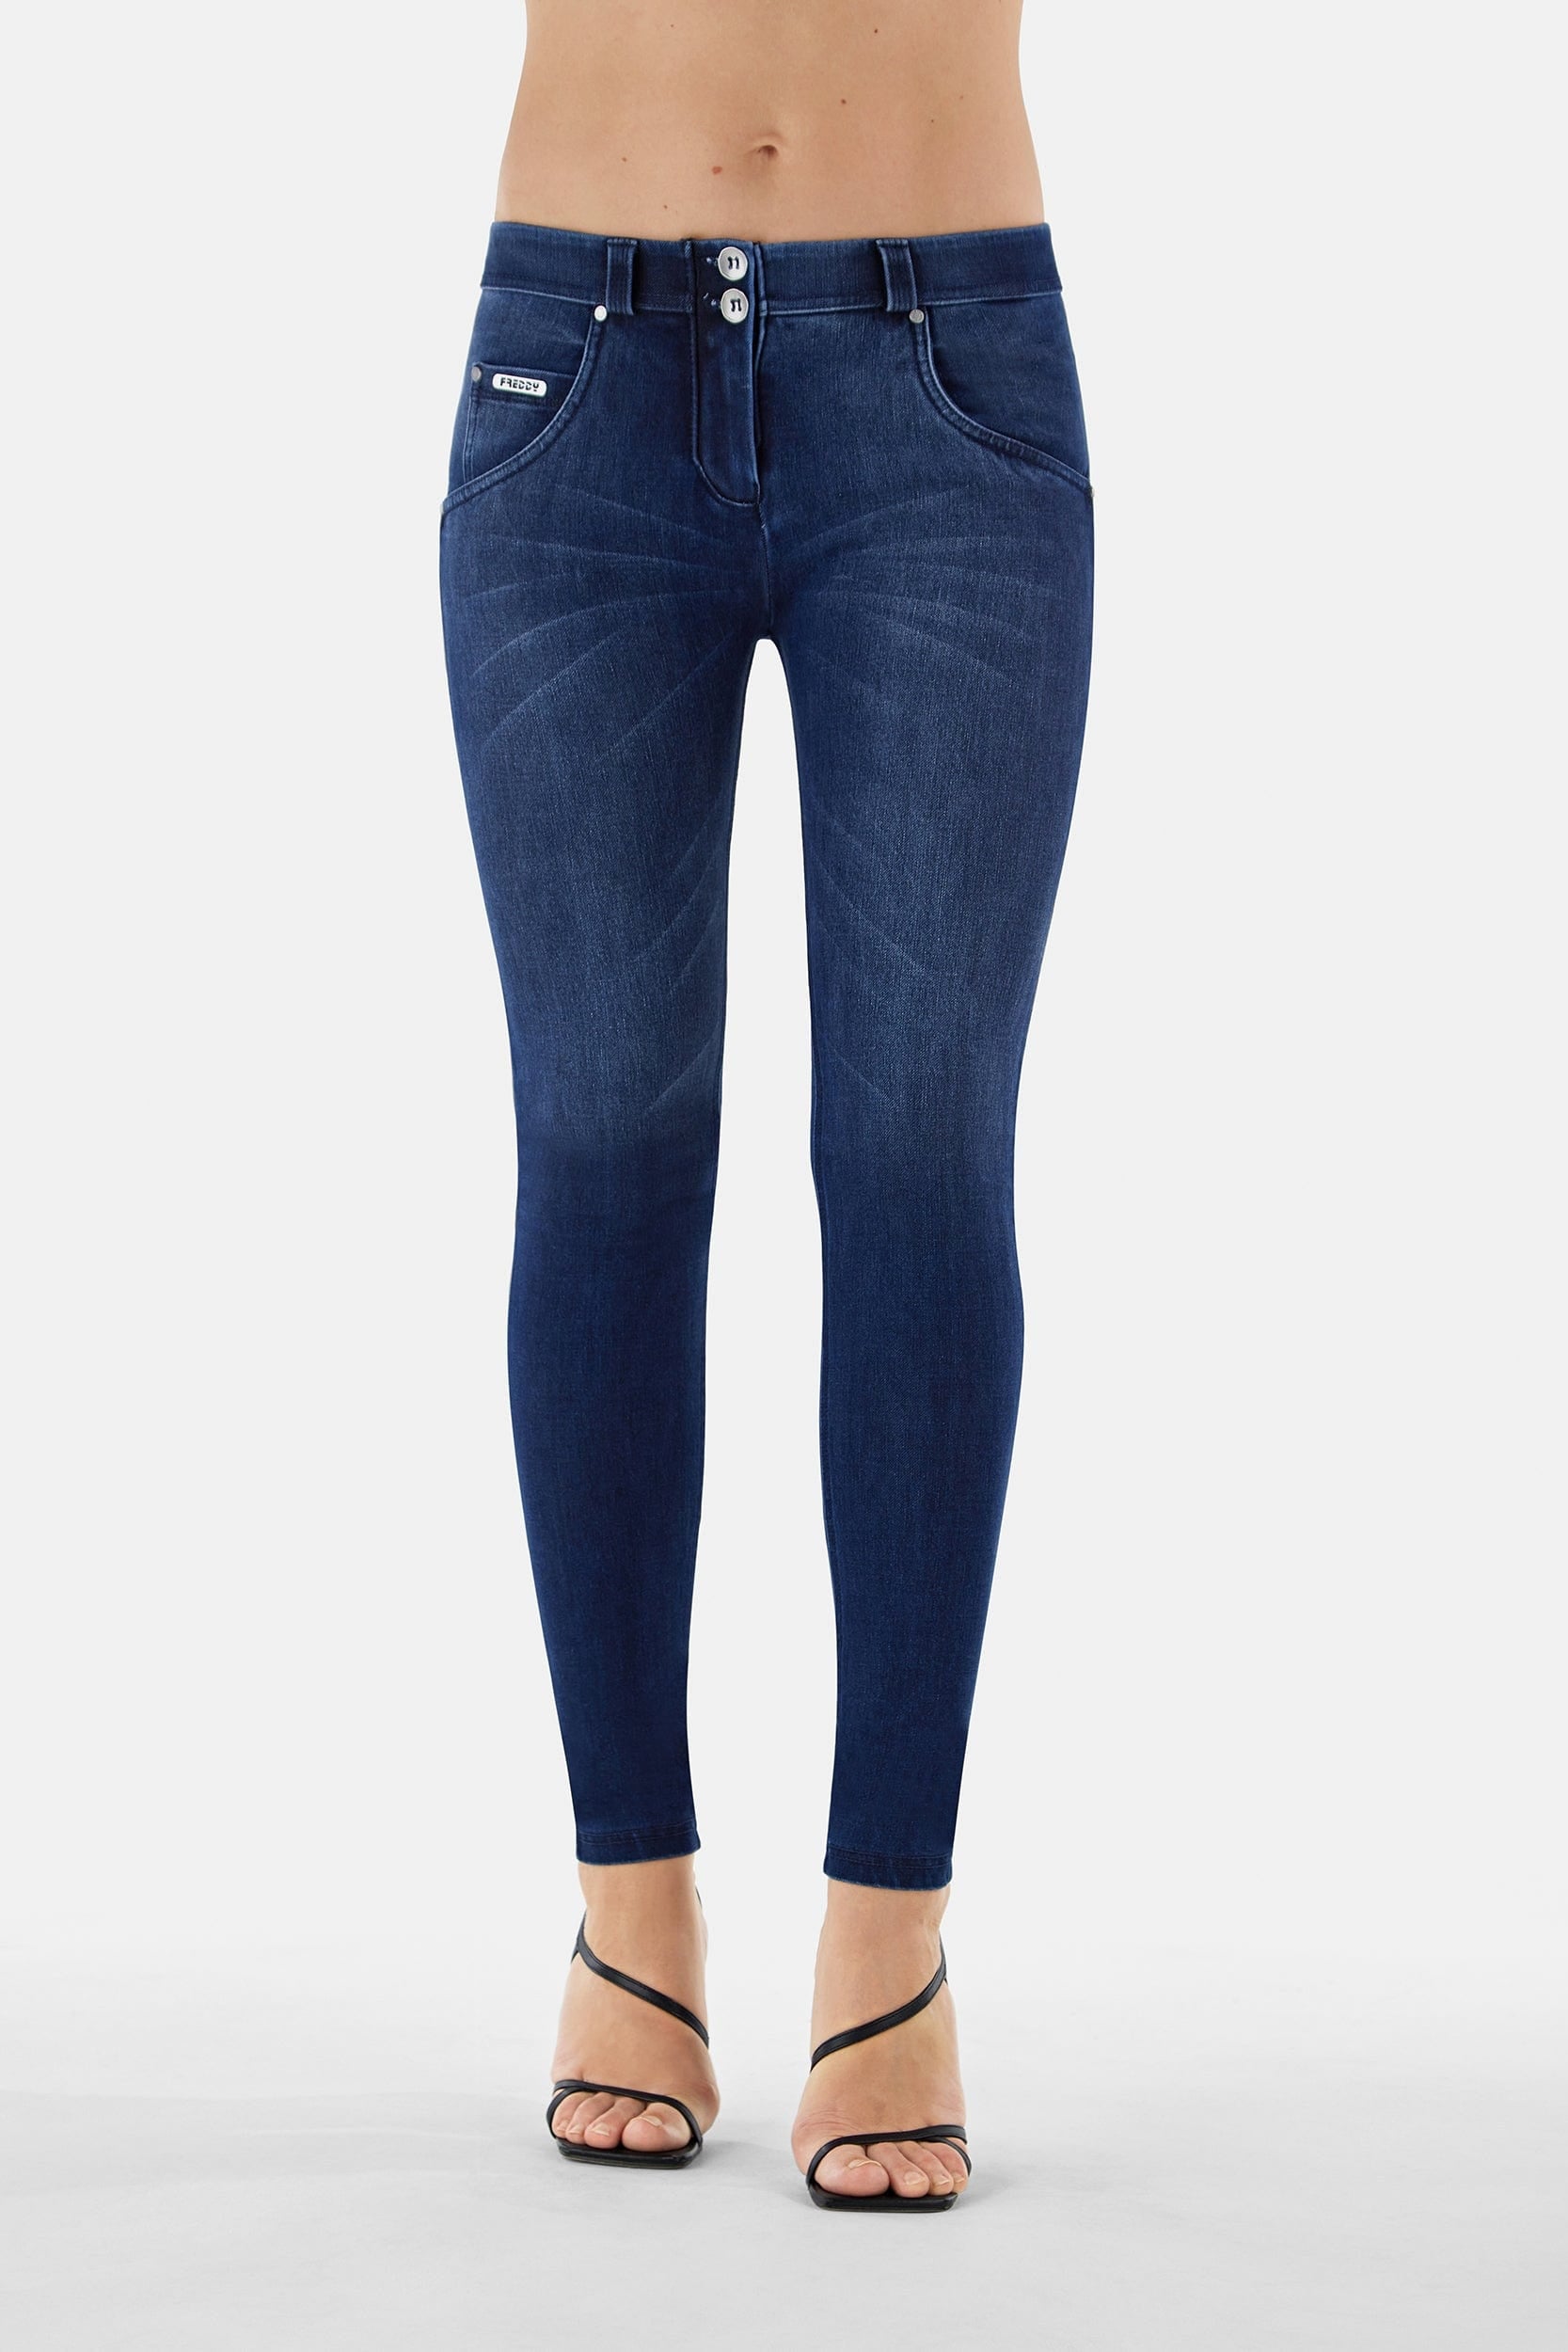 WR.UP® Snug Jeans - Mid Rise - Full Length - Dark Blue + Blue Stitching 2